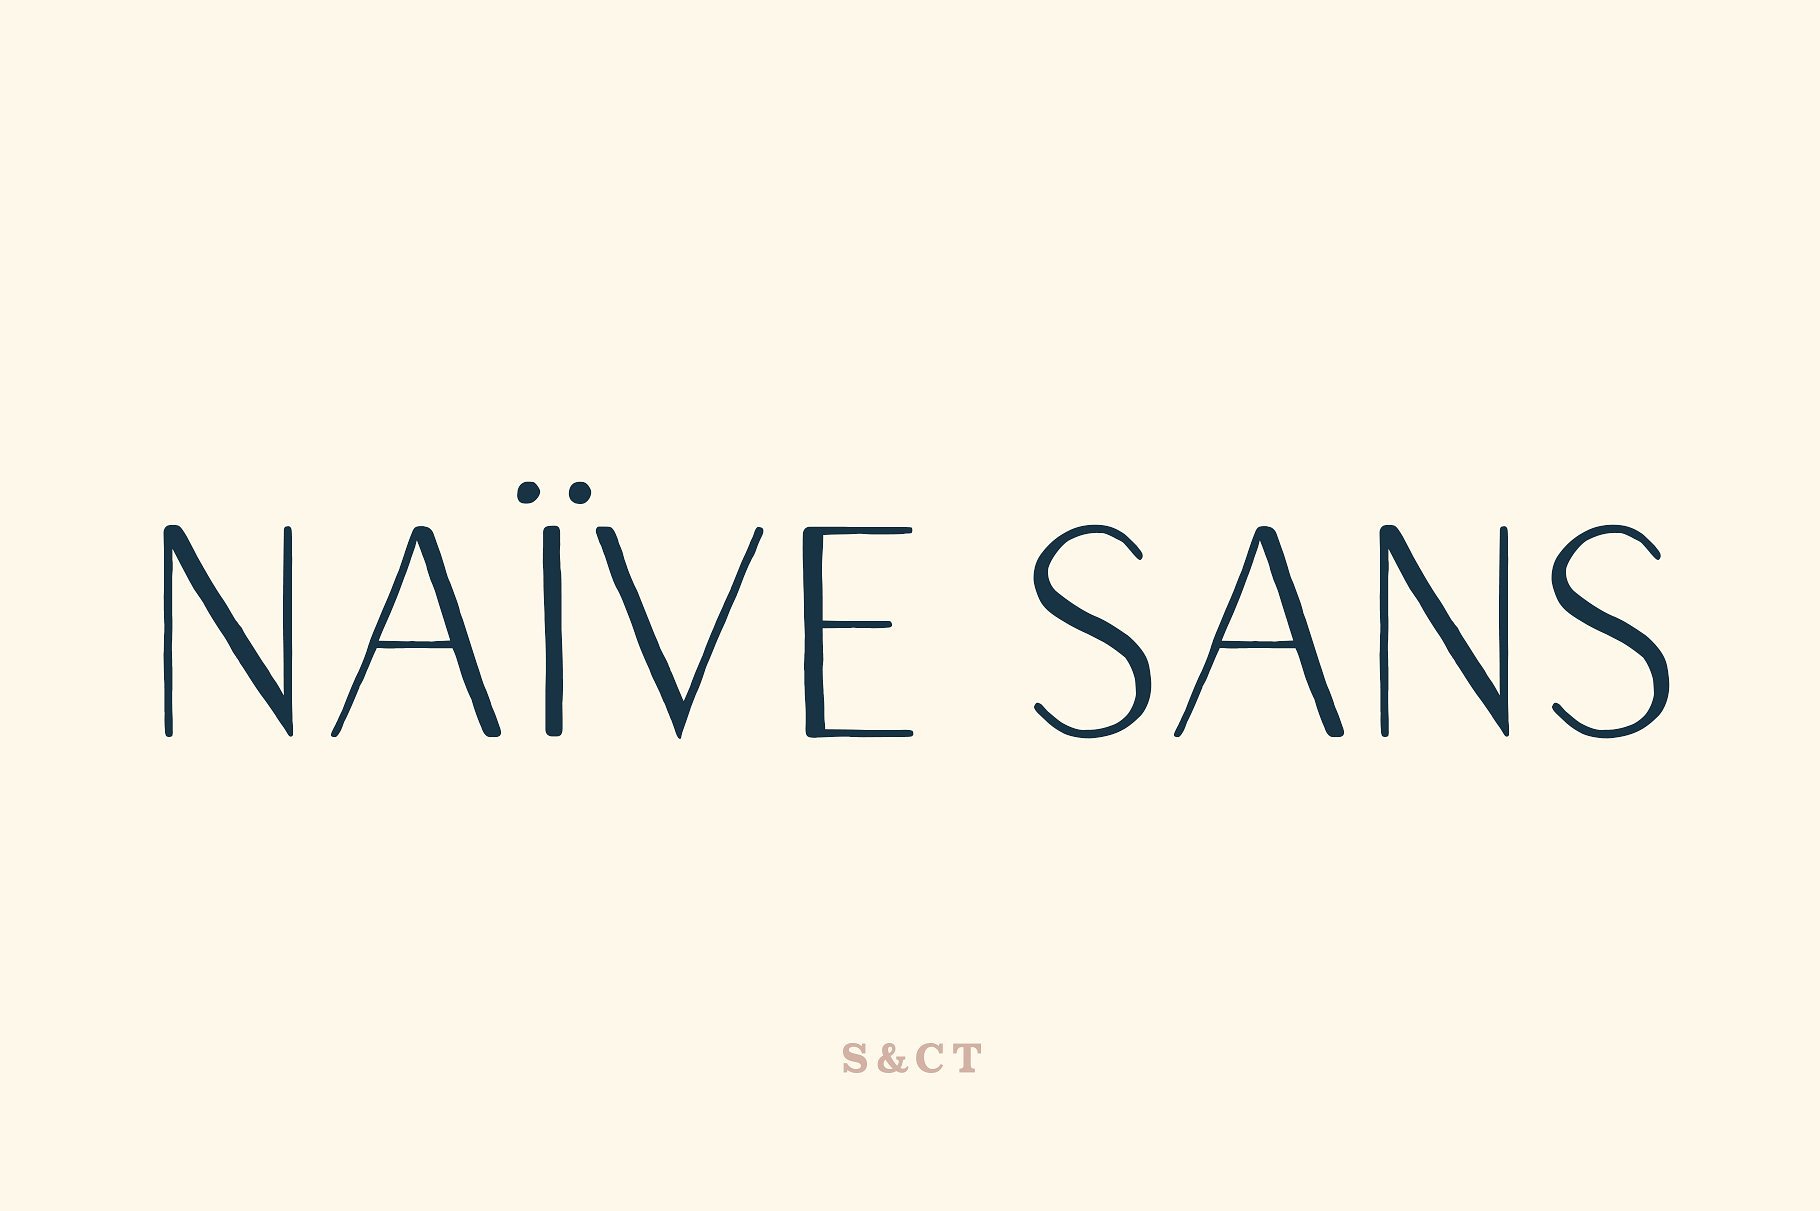 Naive Sans Font Pack